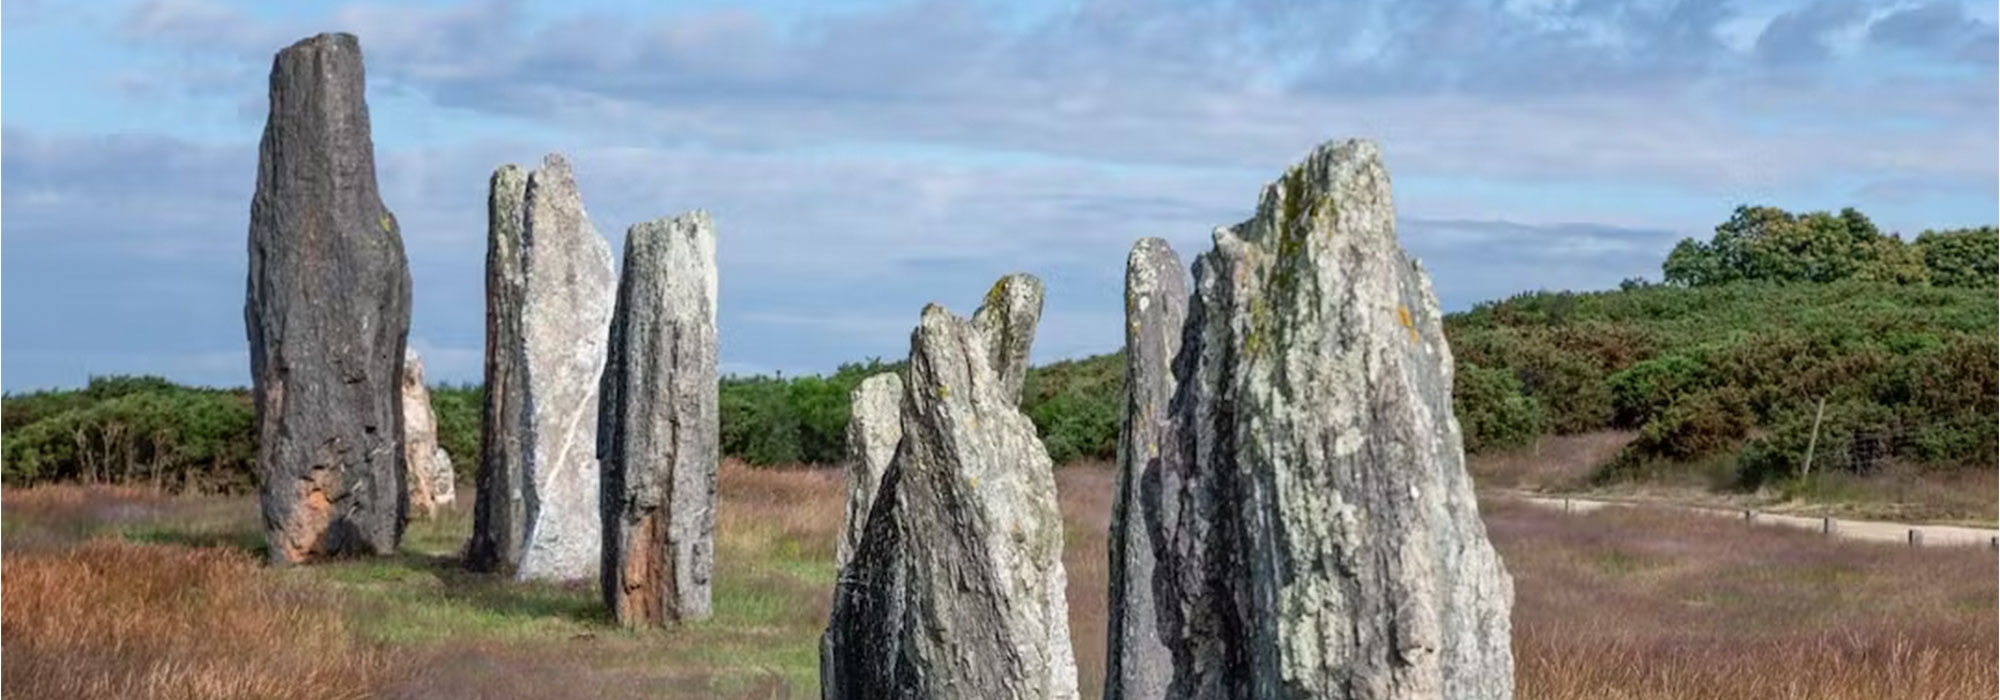 Stones standing upright